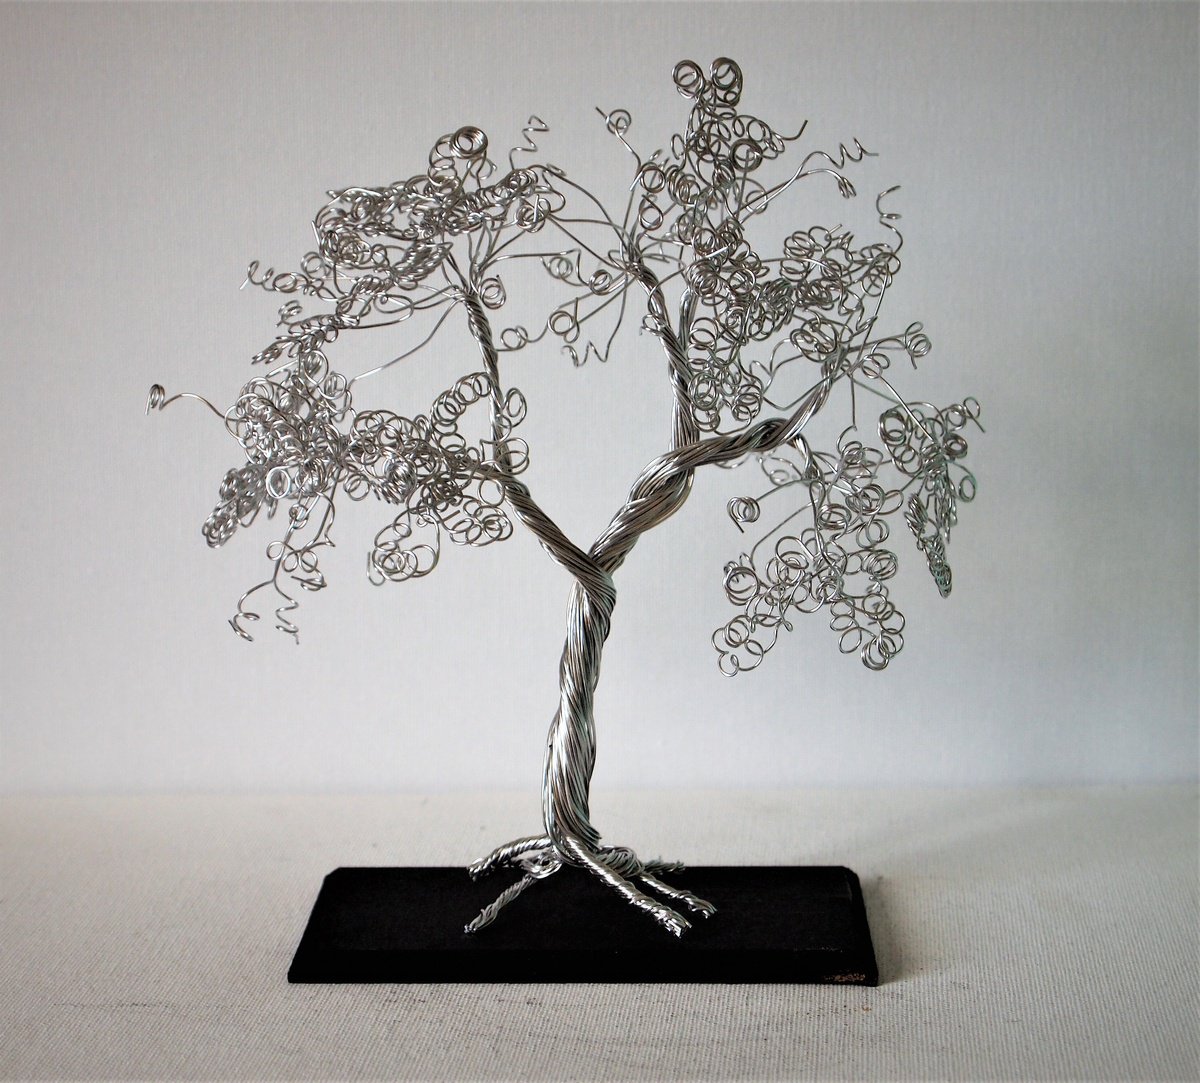 Silver wire tree sculpture, small, delicate 1# by Steph Morgan